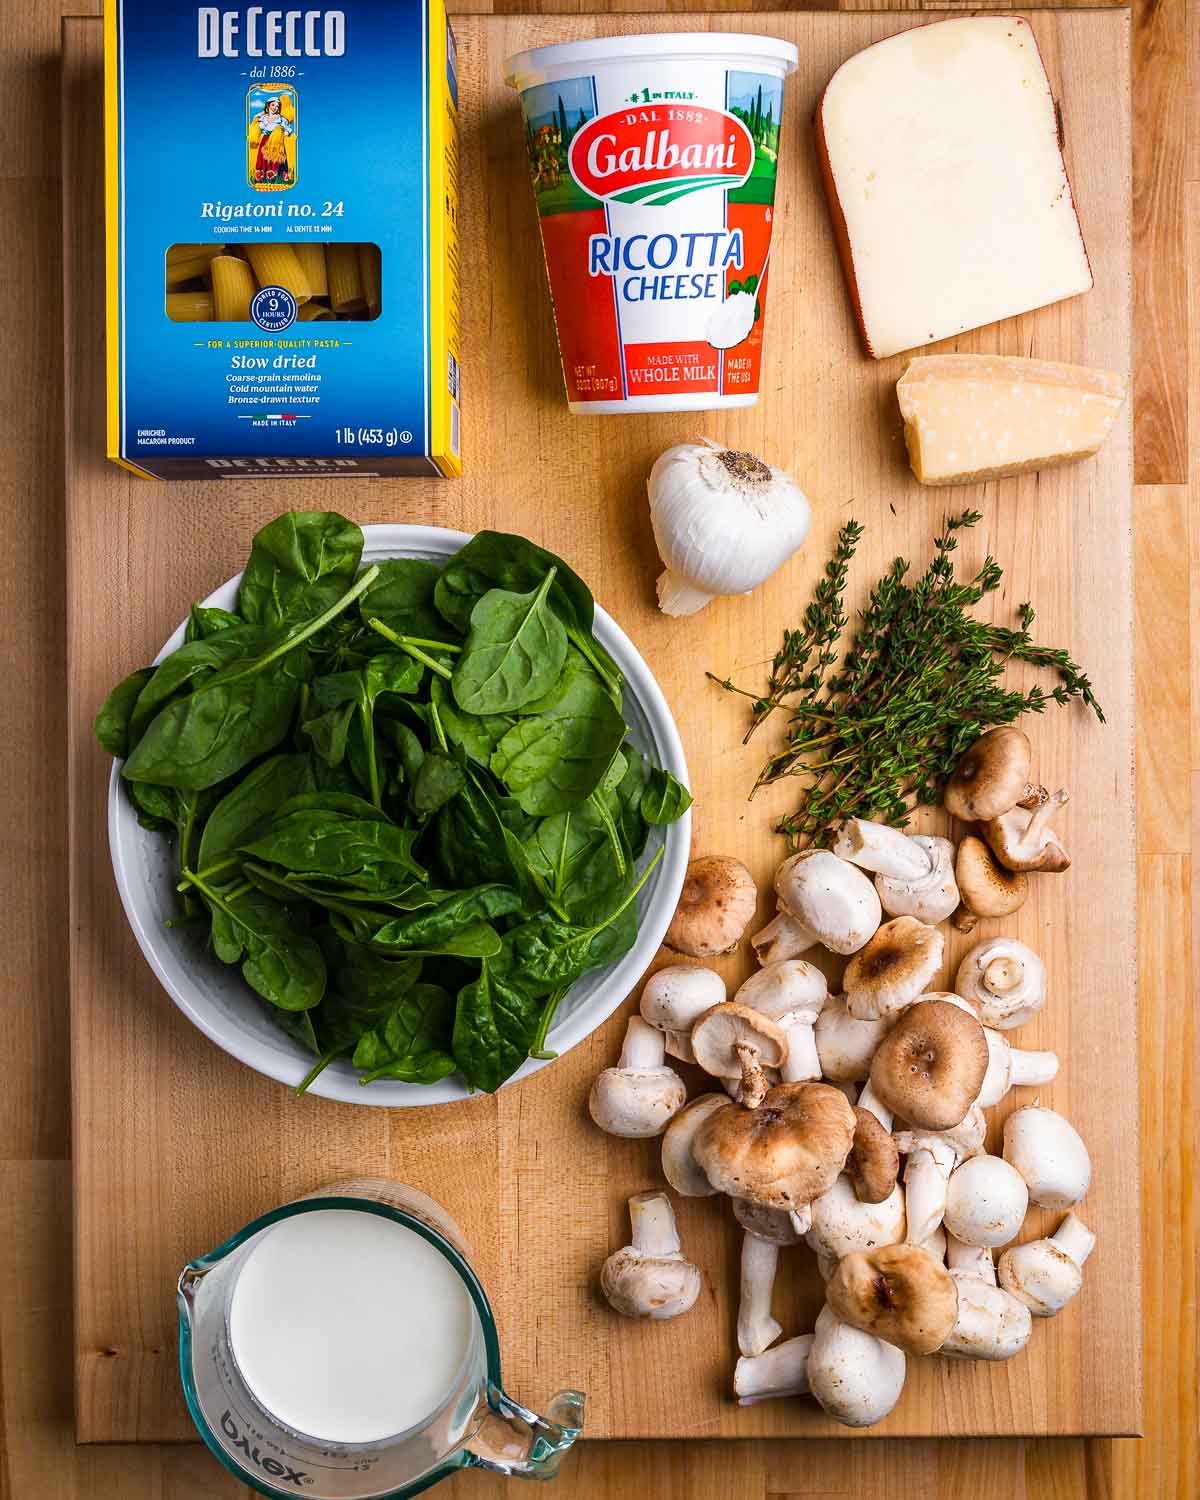 Ingredients shown: rigatoni, ricotta, fontina, garlic, parmesan, spinach, thyme, mushrooms, and cream.